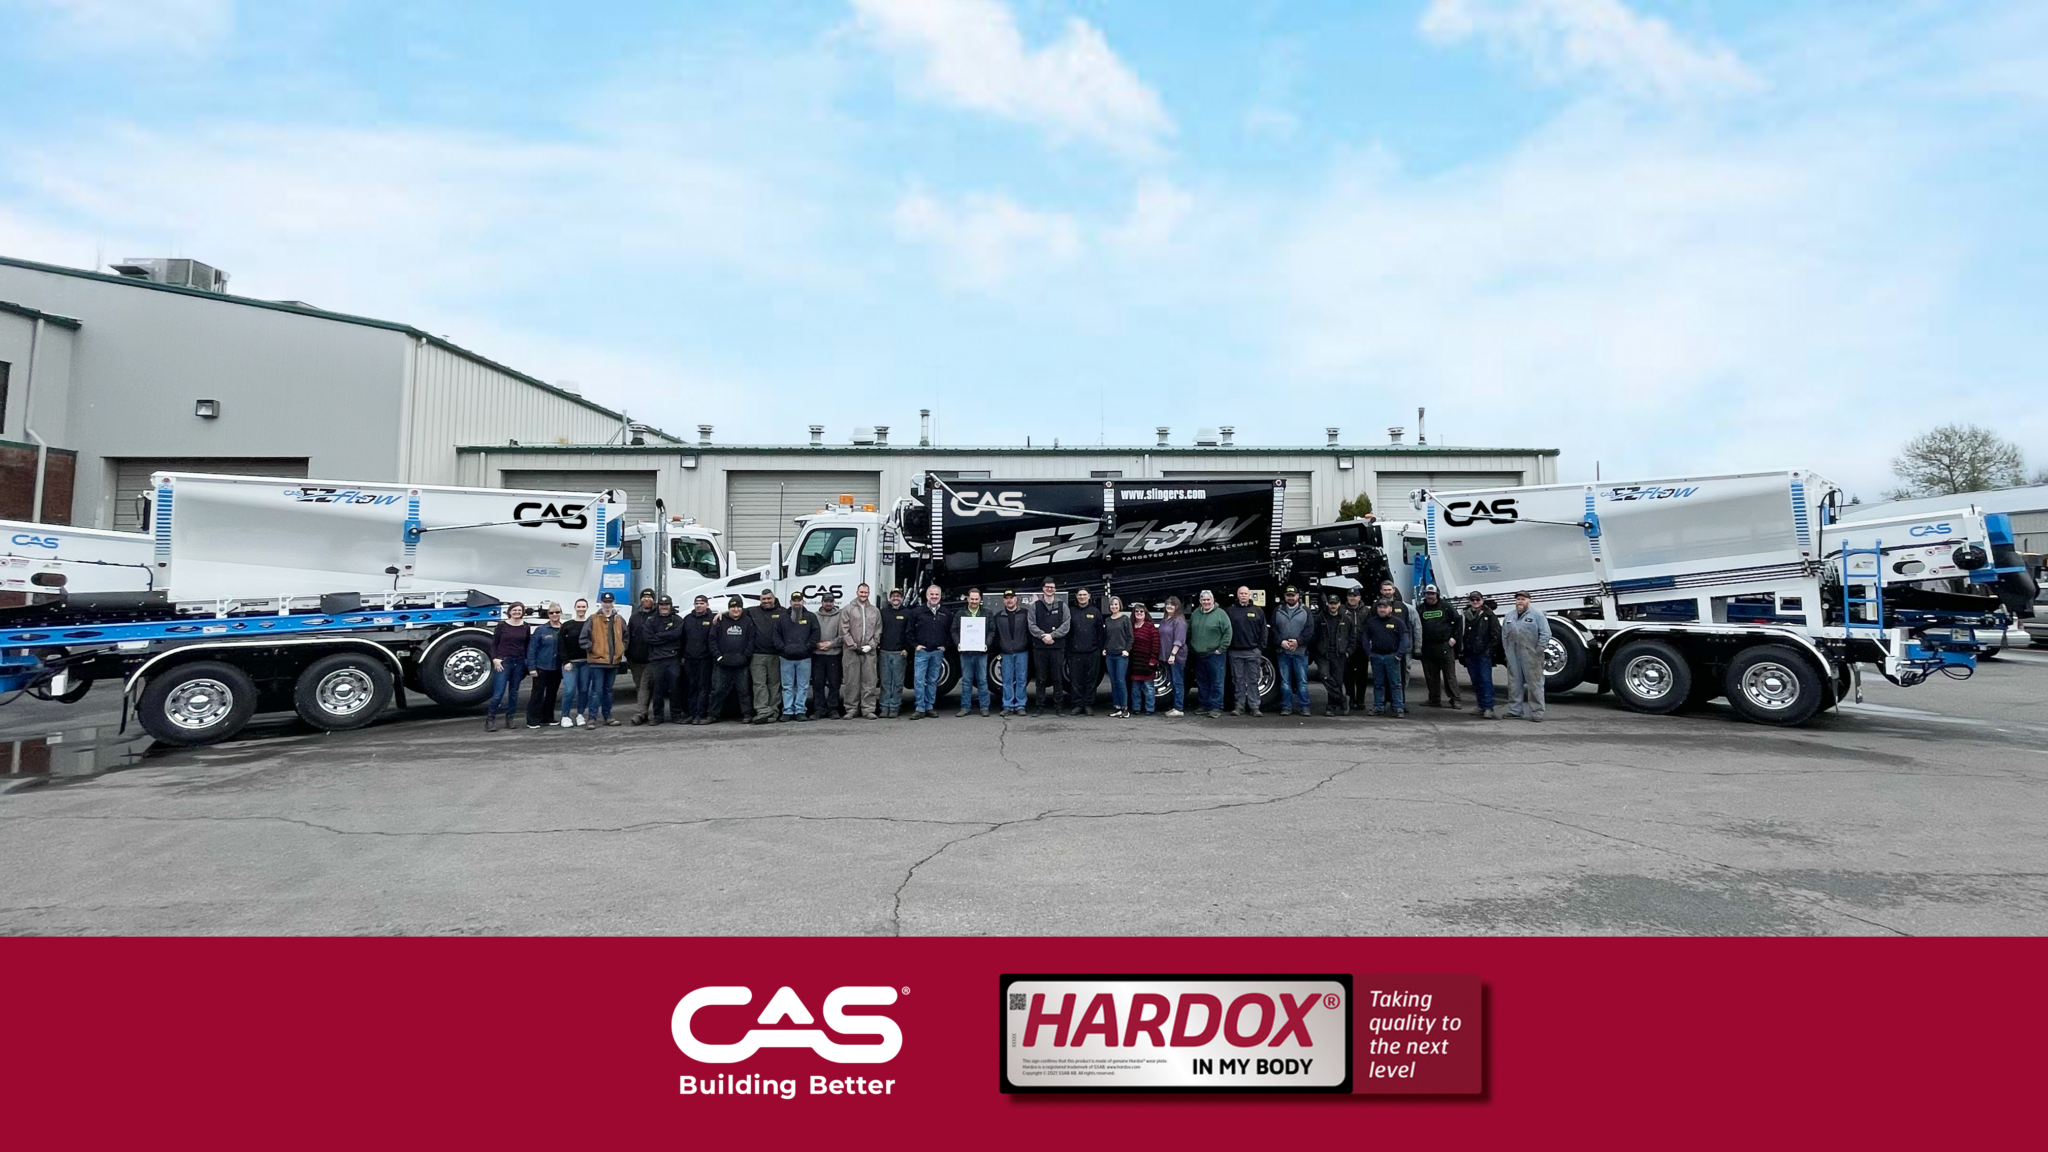 Hardox® in My Body - CAS - Conveyor Application Systems  